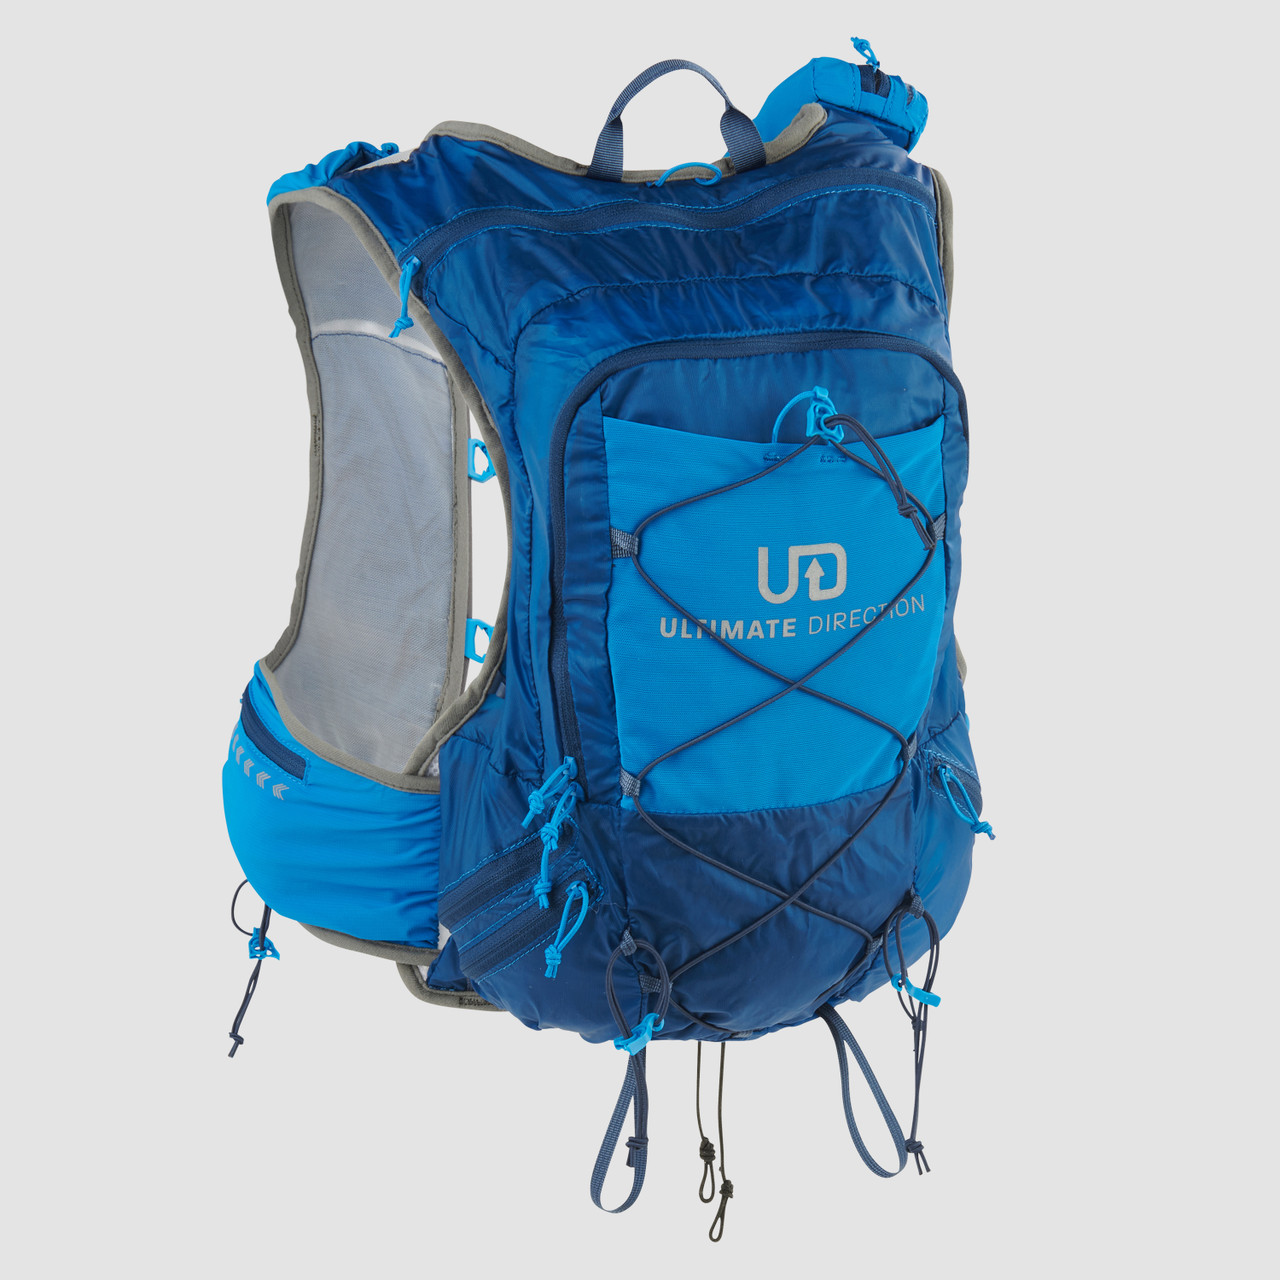 Ultimate Direction Adventure Vest 6.0 in Blue Size Large